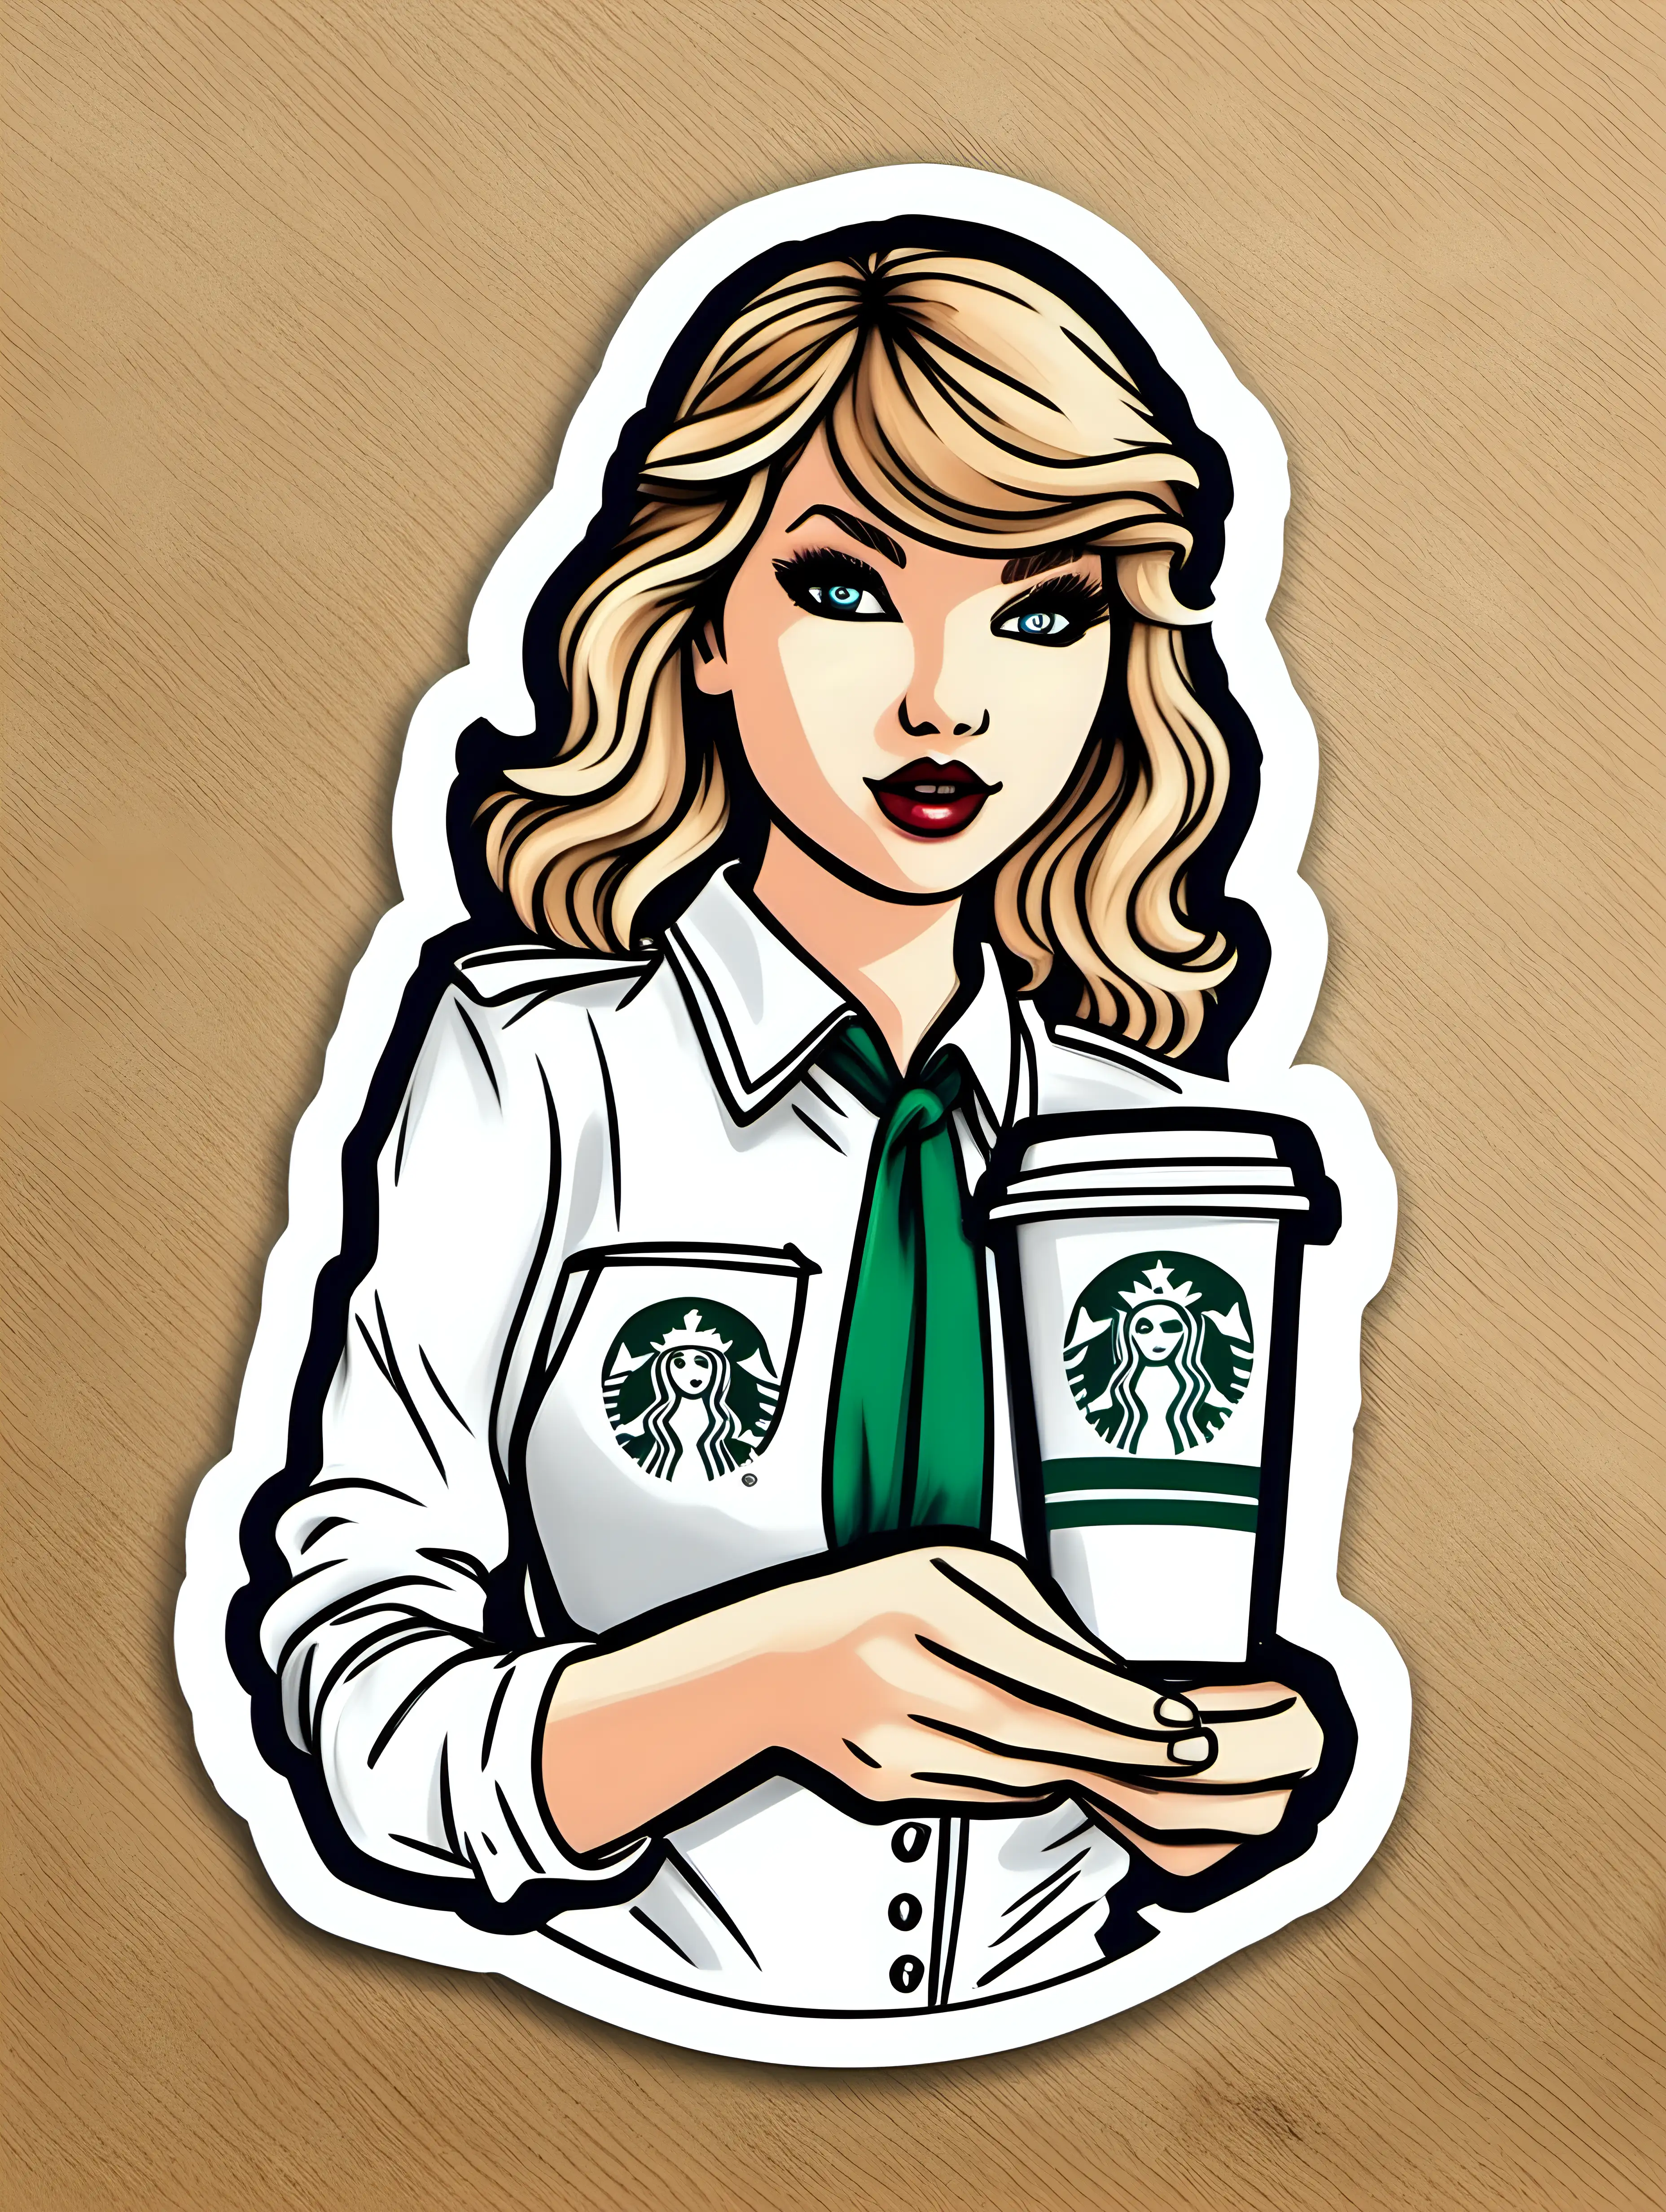 Enchanting Taylor Swift Animated in Starbucks Uniform Crafting Coffee Magic